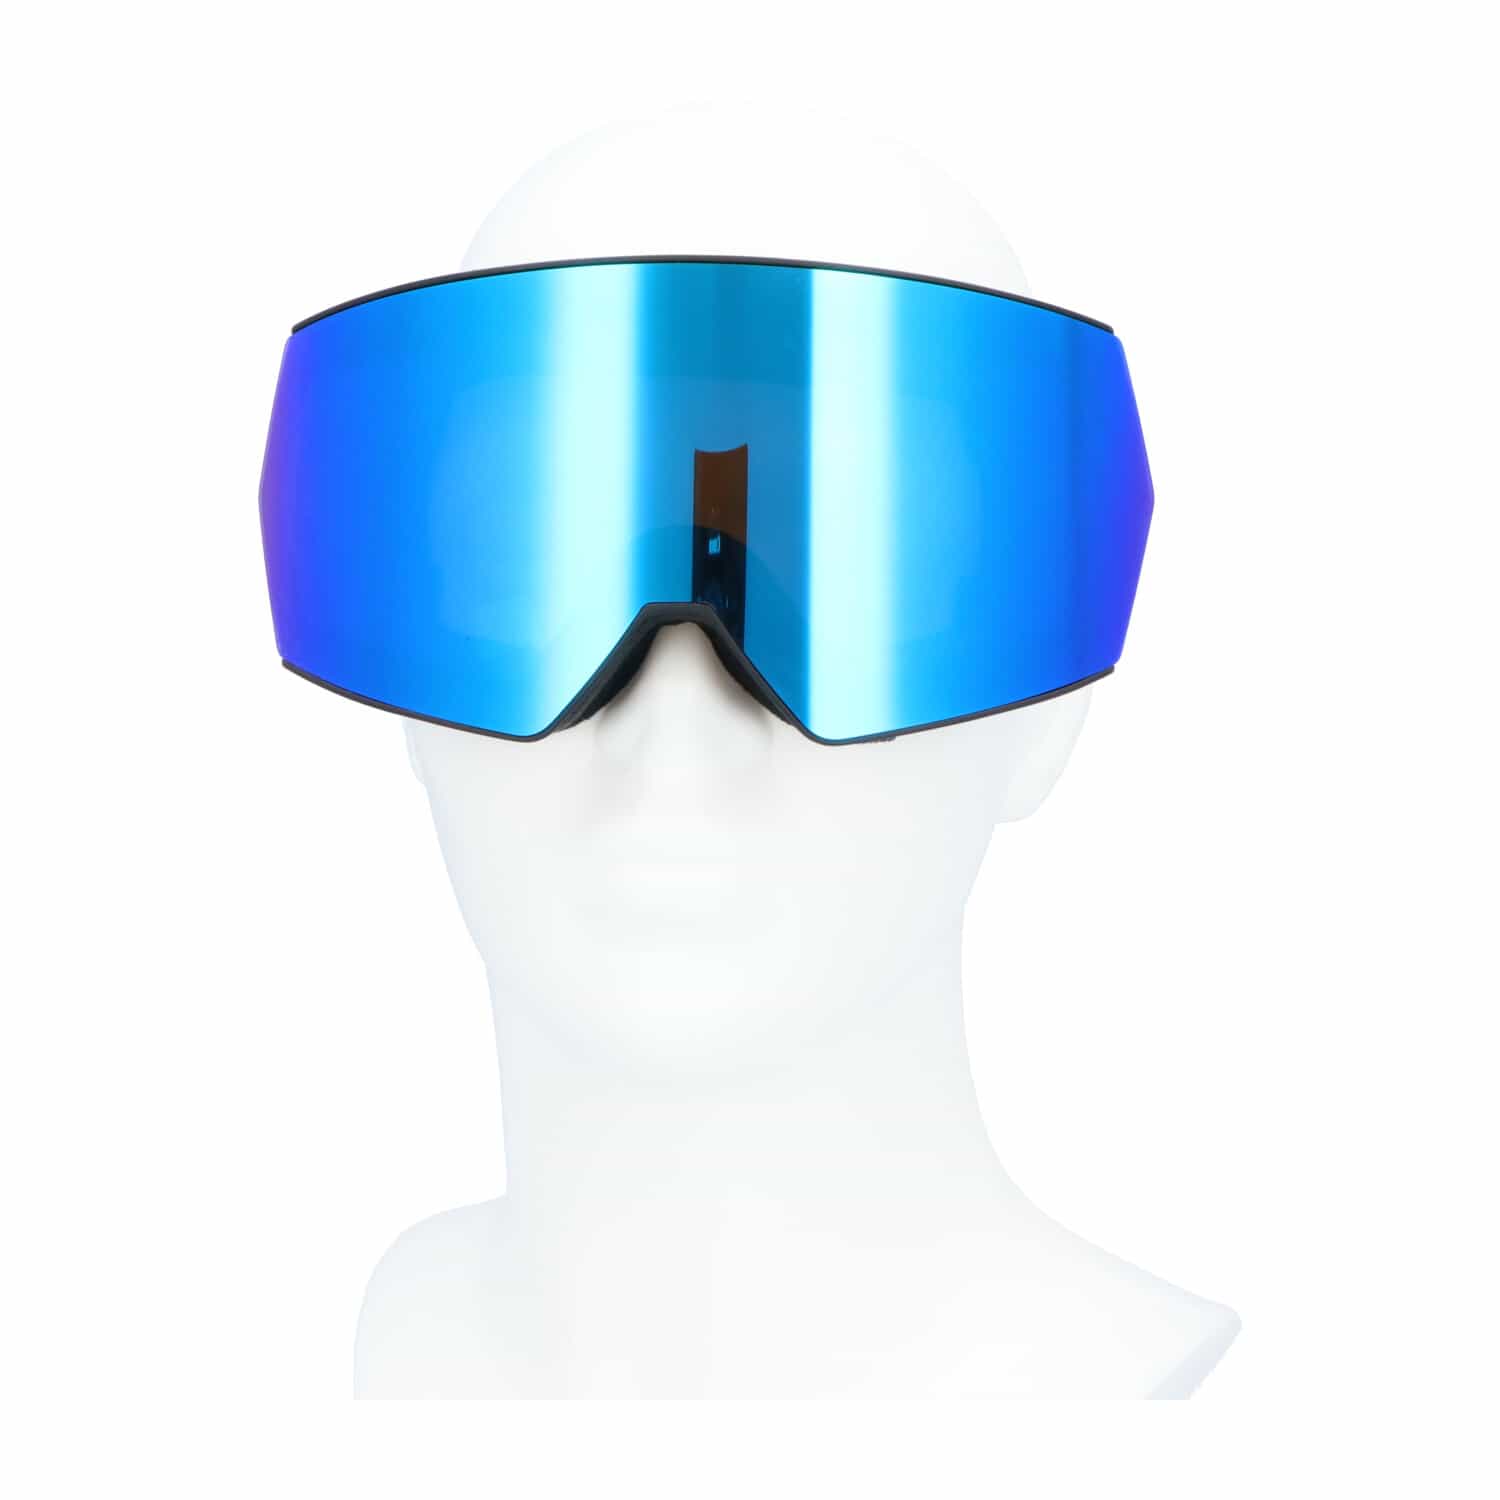 5one® Alpine 6 Blue Black Medium Skibril met zwart montuur met 2 lenzen